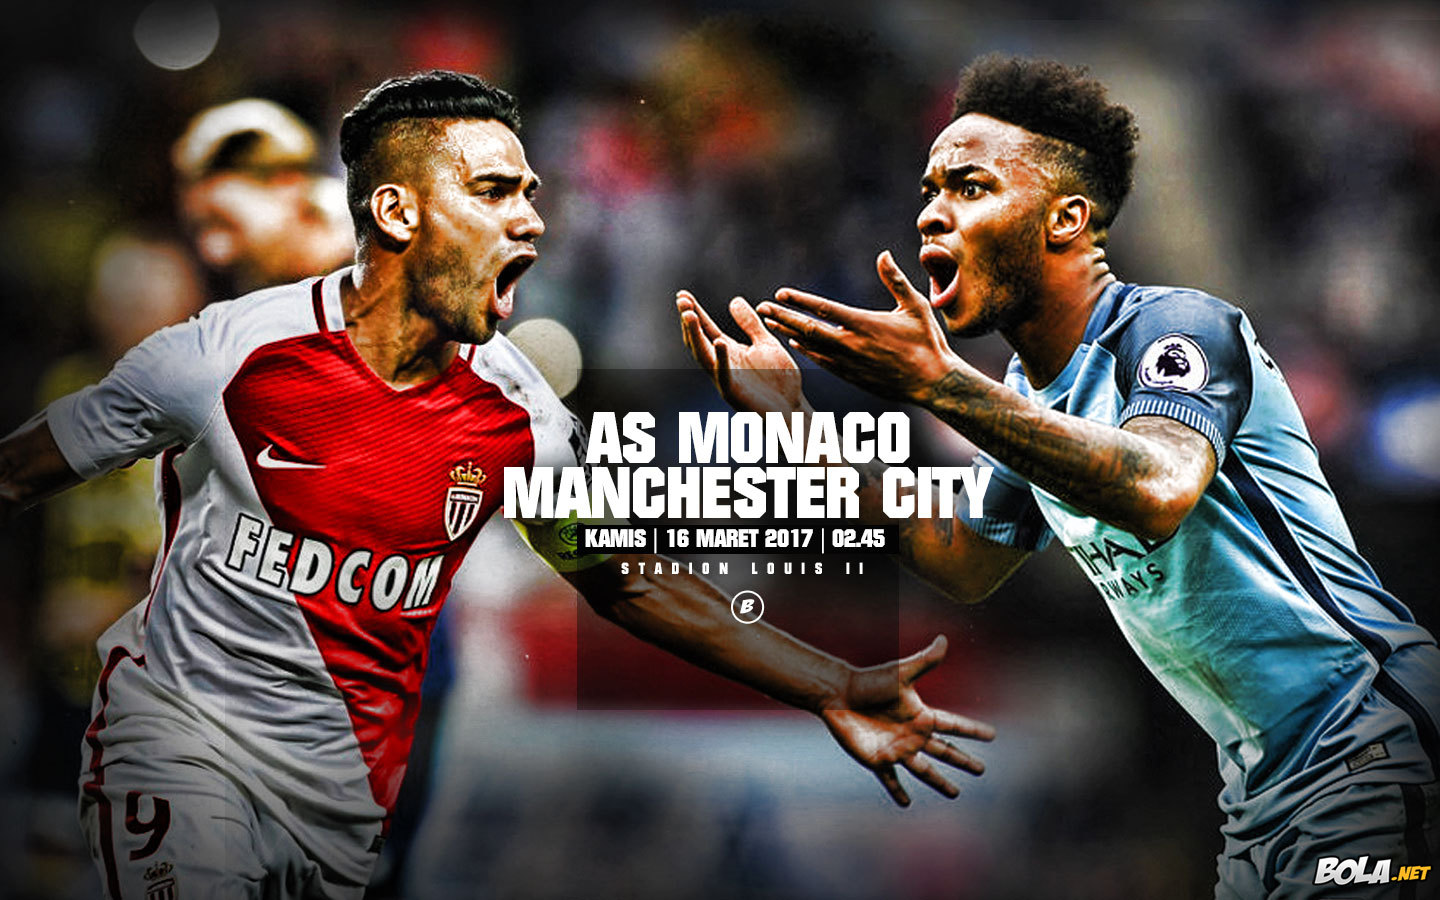 Deskripsi : Wallpaper As Monaco Vs Manchester City, size: 1440x900